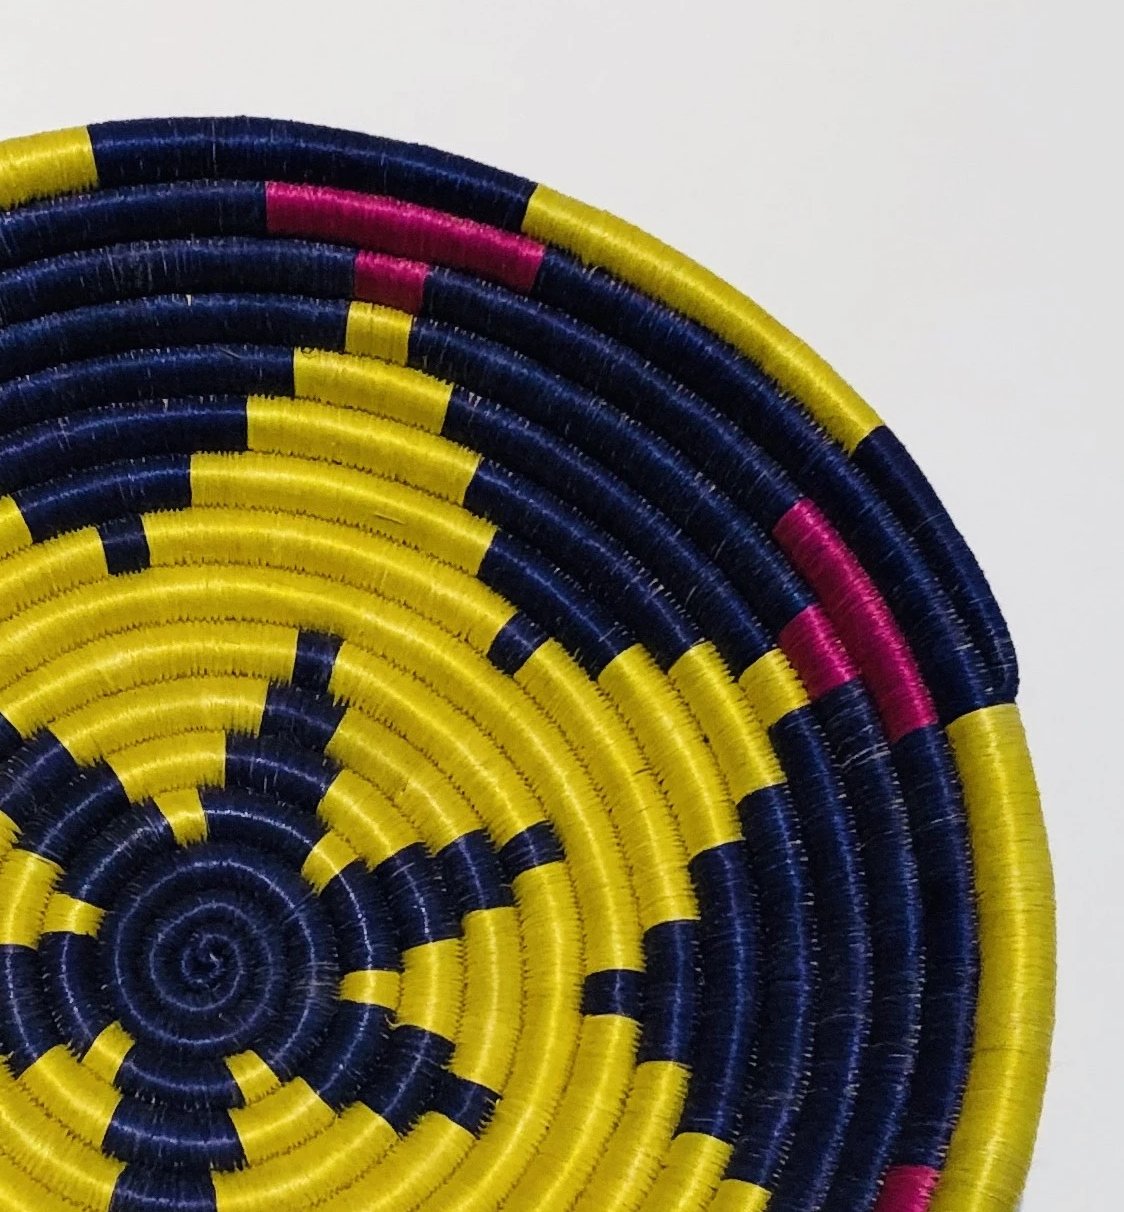 Handwoven Baskets from Rwanda